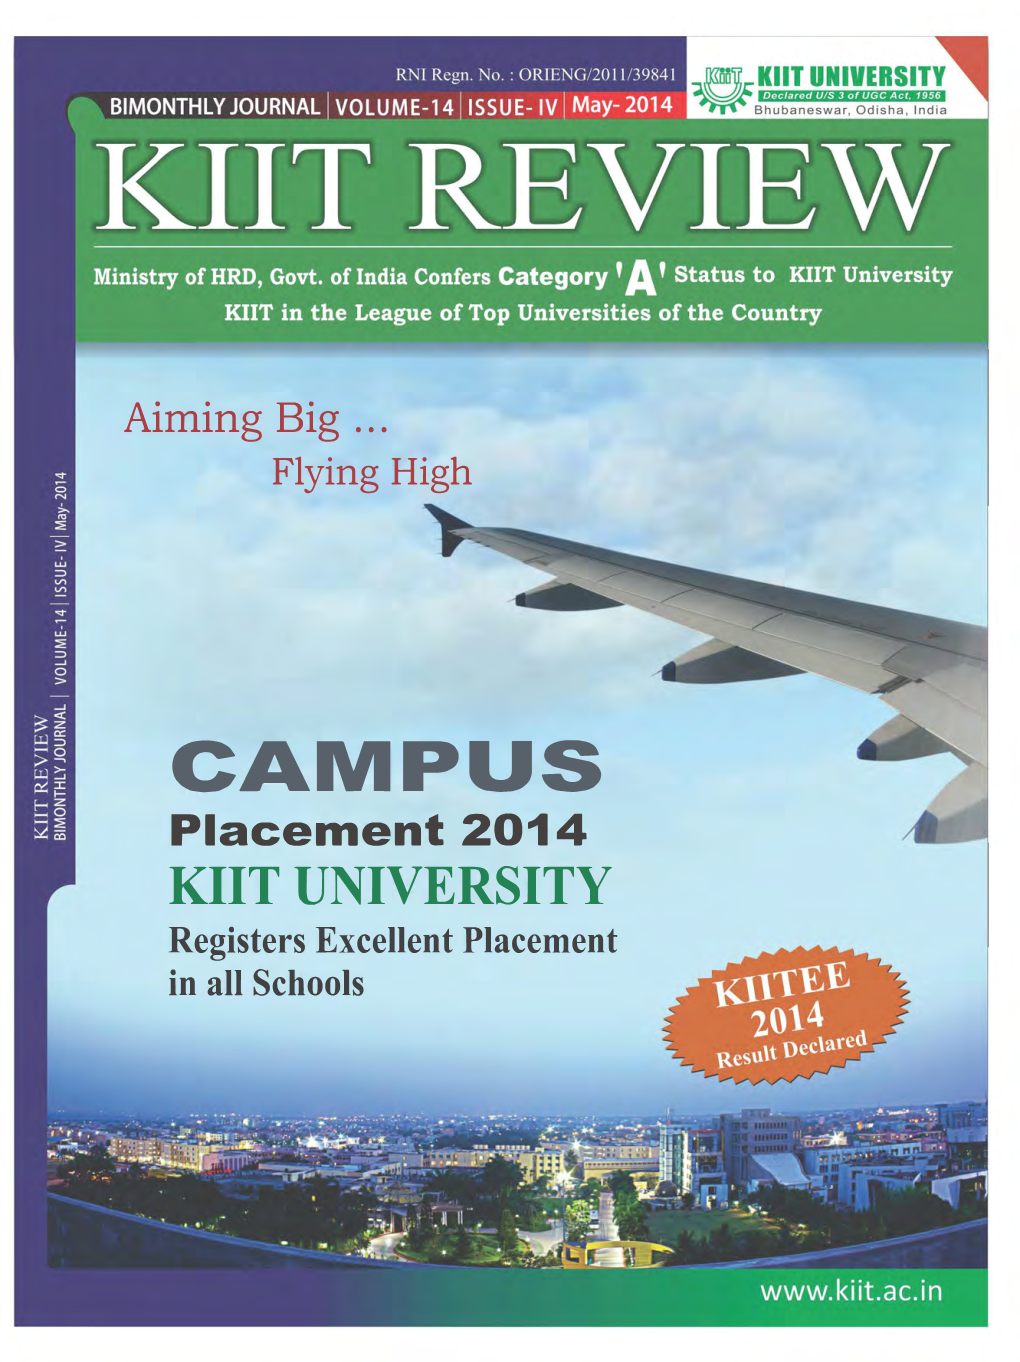 CAMPUS Place111ent 2014 Kilt UNIVERSITY Registers Excellent Placement in All Schools 2014 Prof